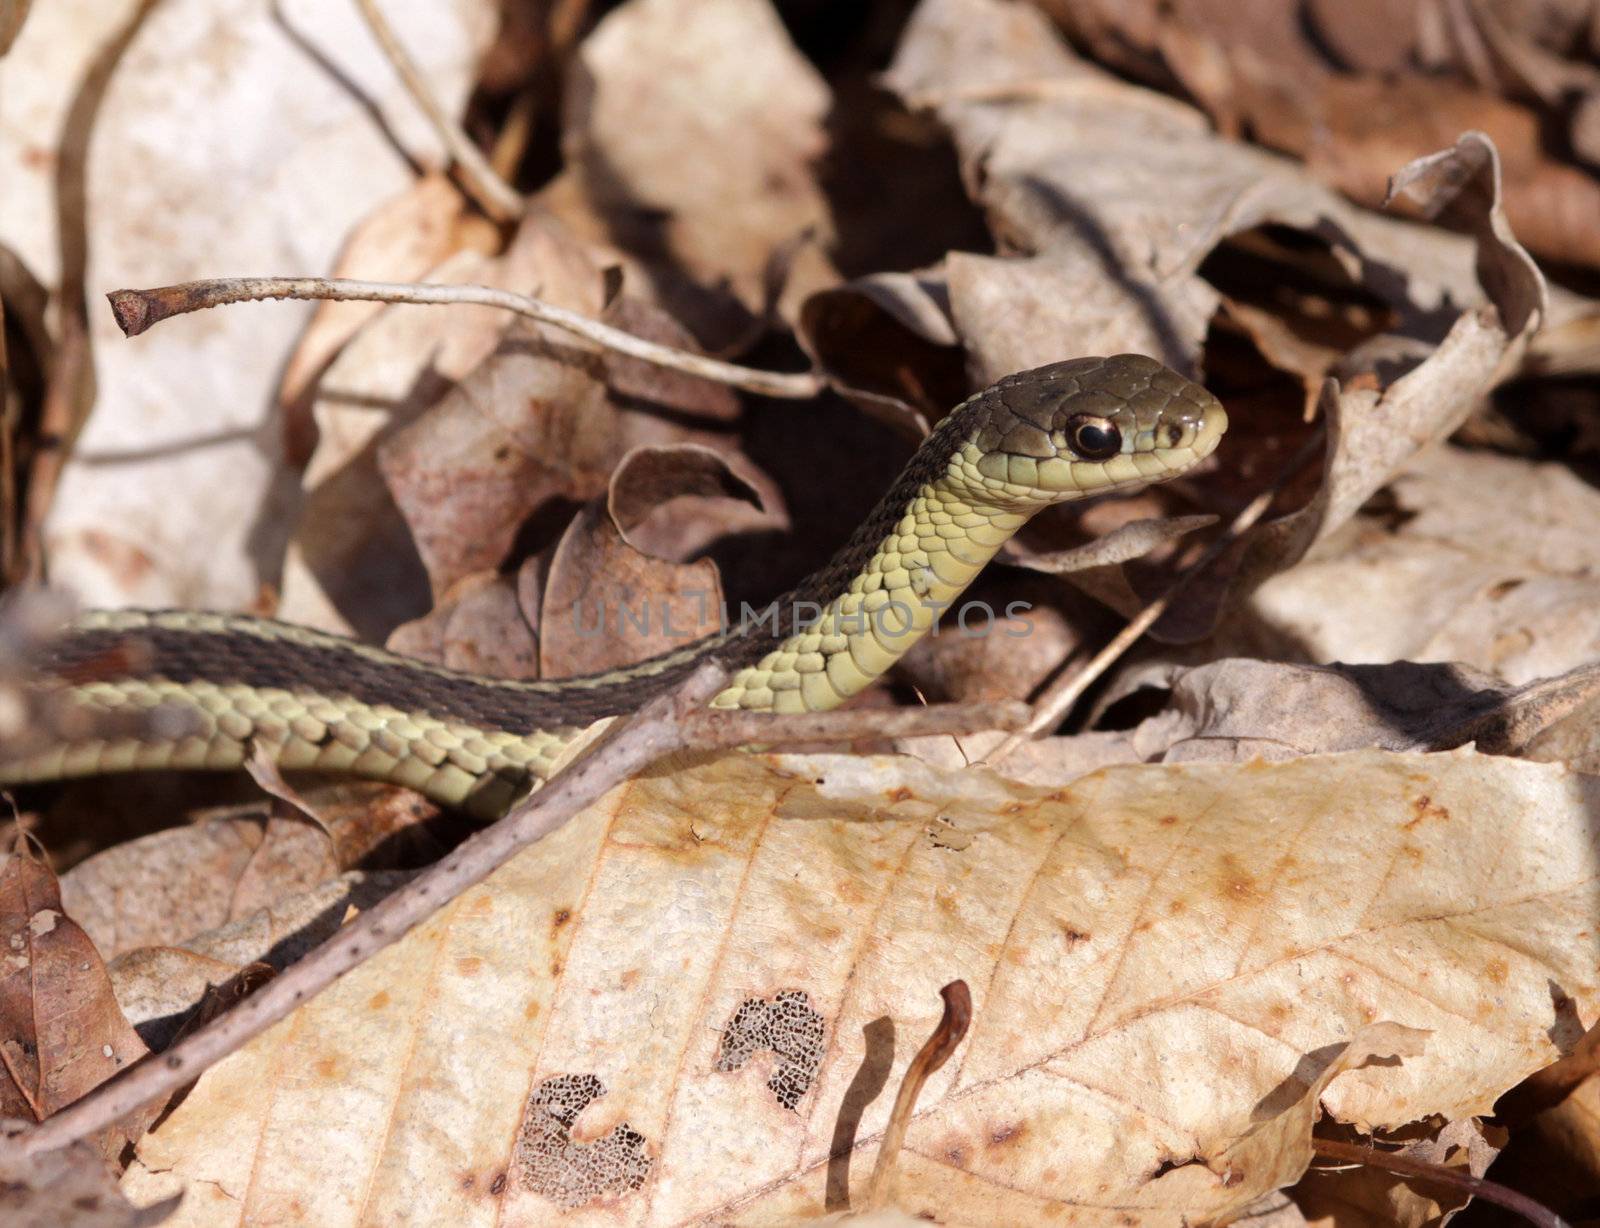 A focused eastern garter snake (Thamnophis sirtalis), peering through some dead leaves.